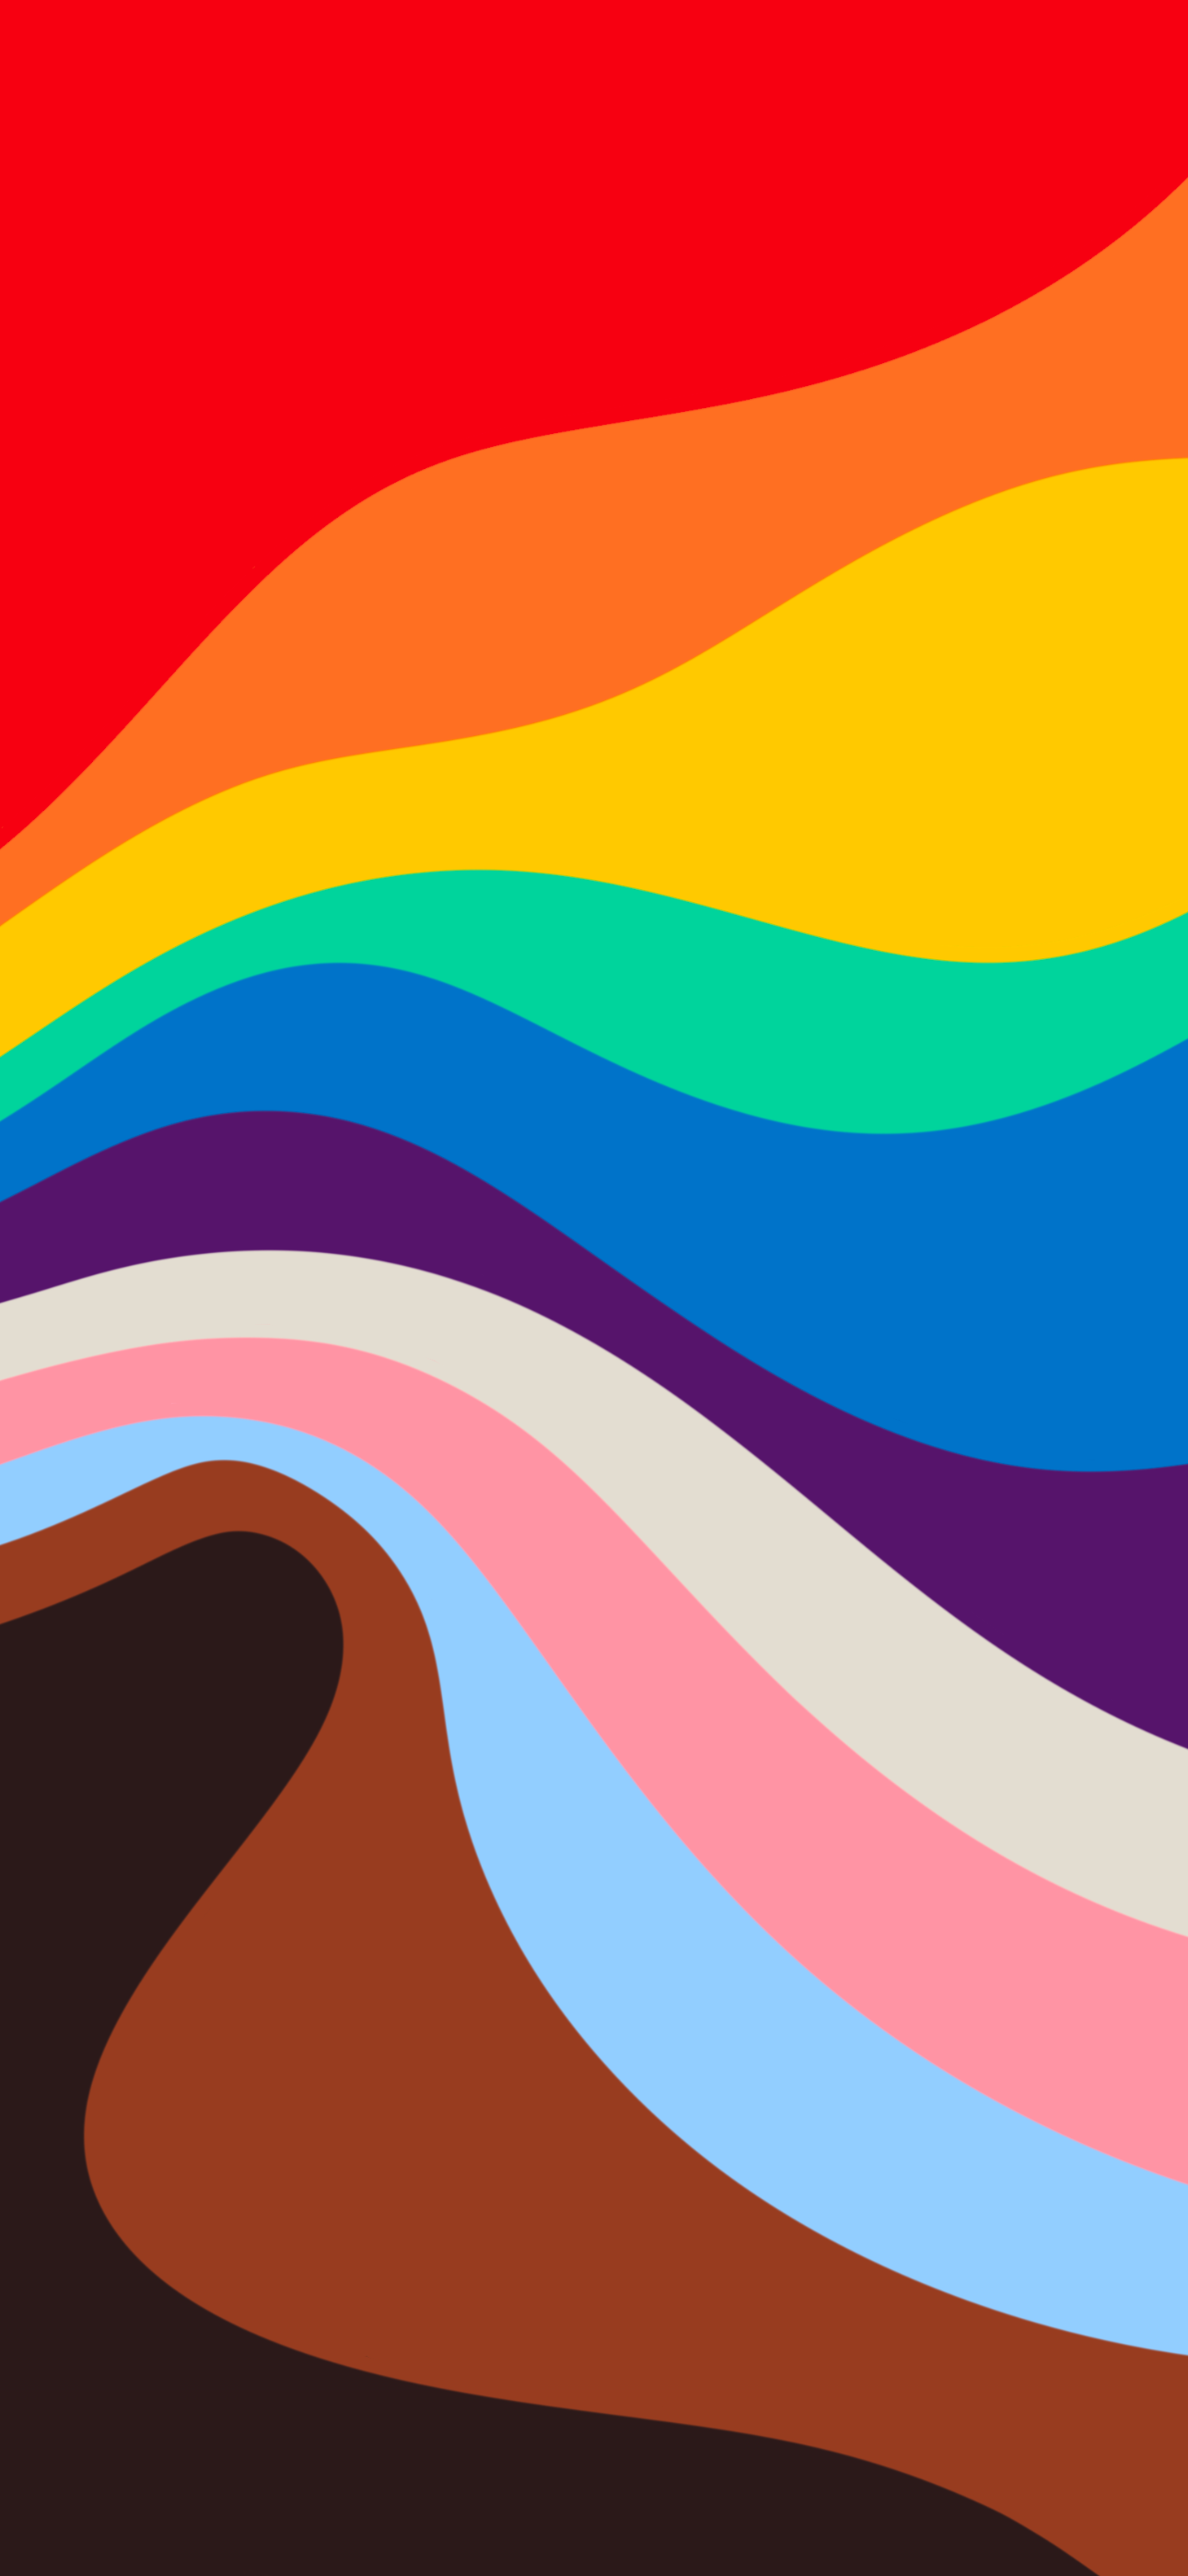 Apple Pride 2020 inspired wallpapers for iPhone Wallpaper Download  MOONAZ